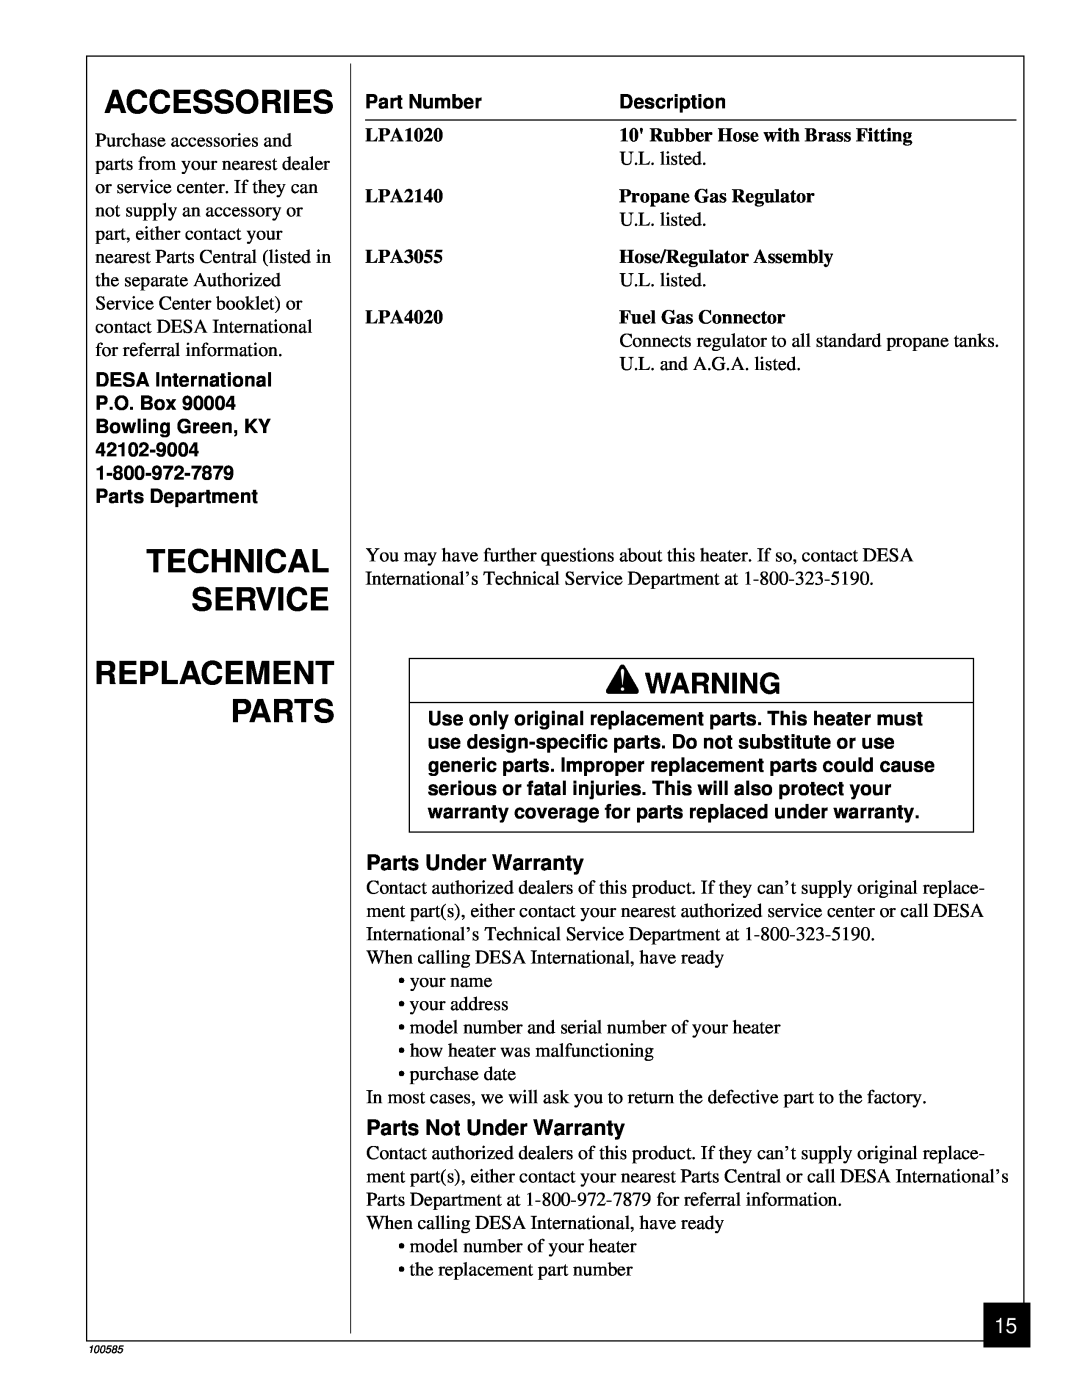 Desa BLP155AT owner manual Accessories, Technical Service Replacement Parts, Part Number, Description 